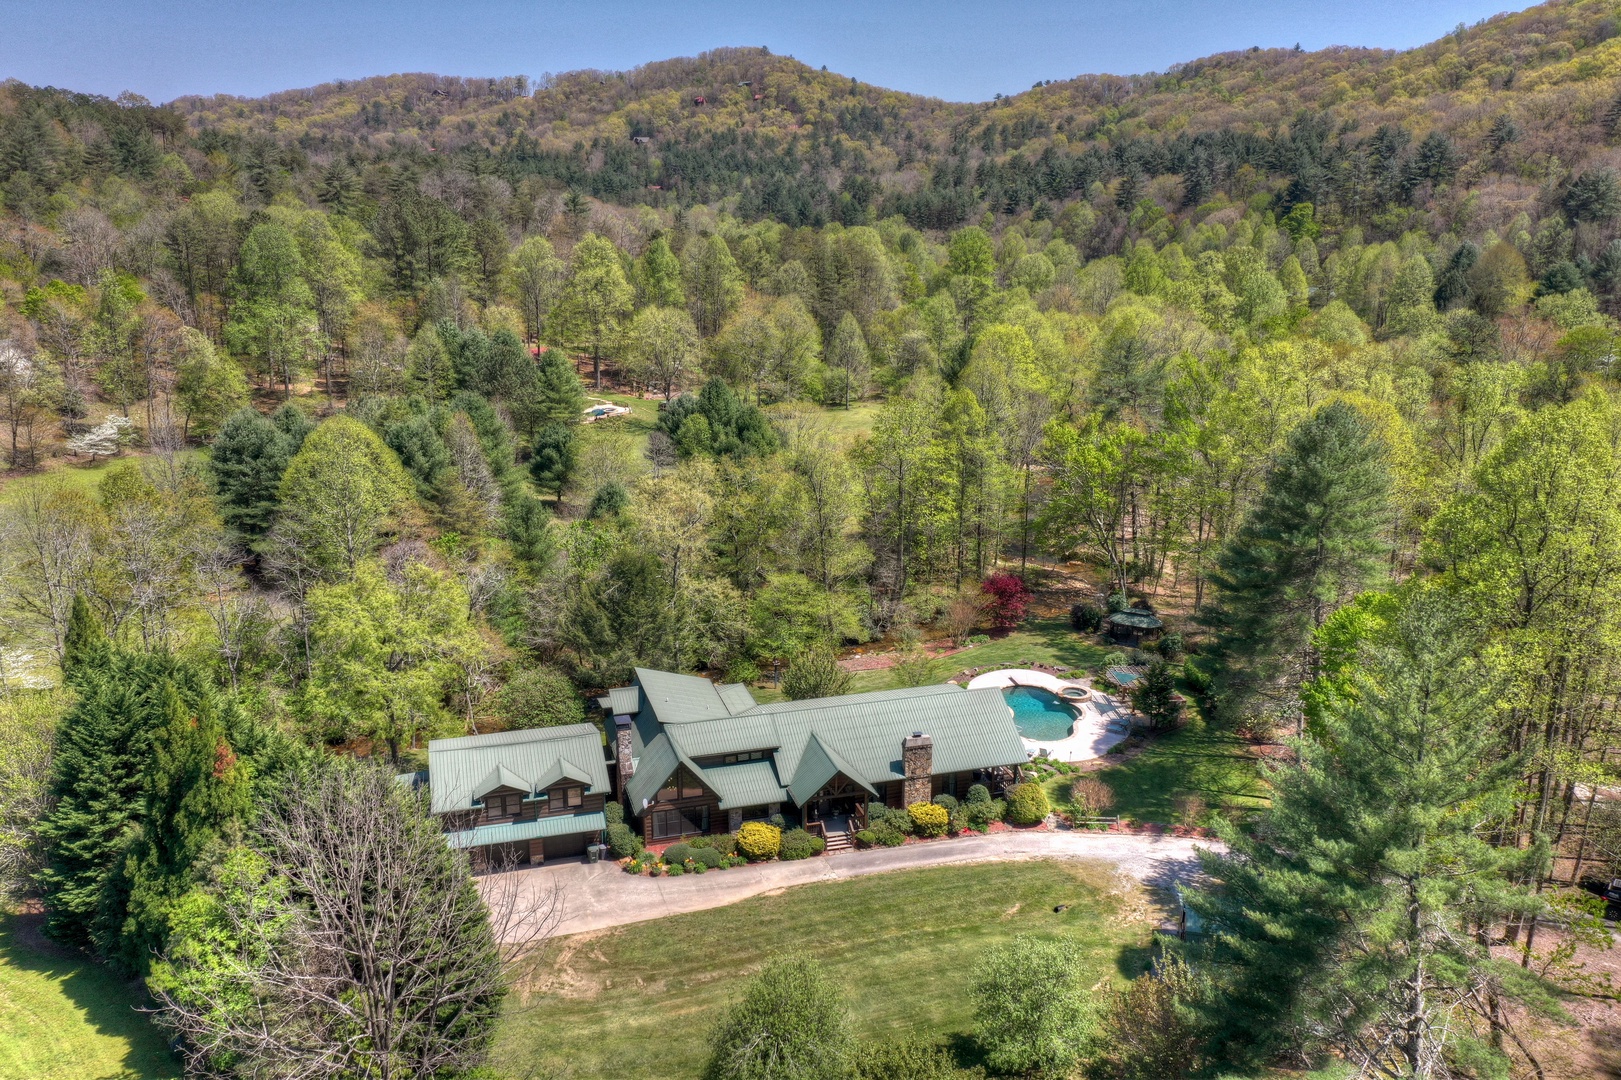 Stanley Creek Lodge - Aerial View of Lodge